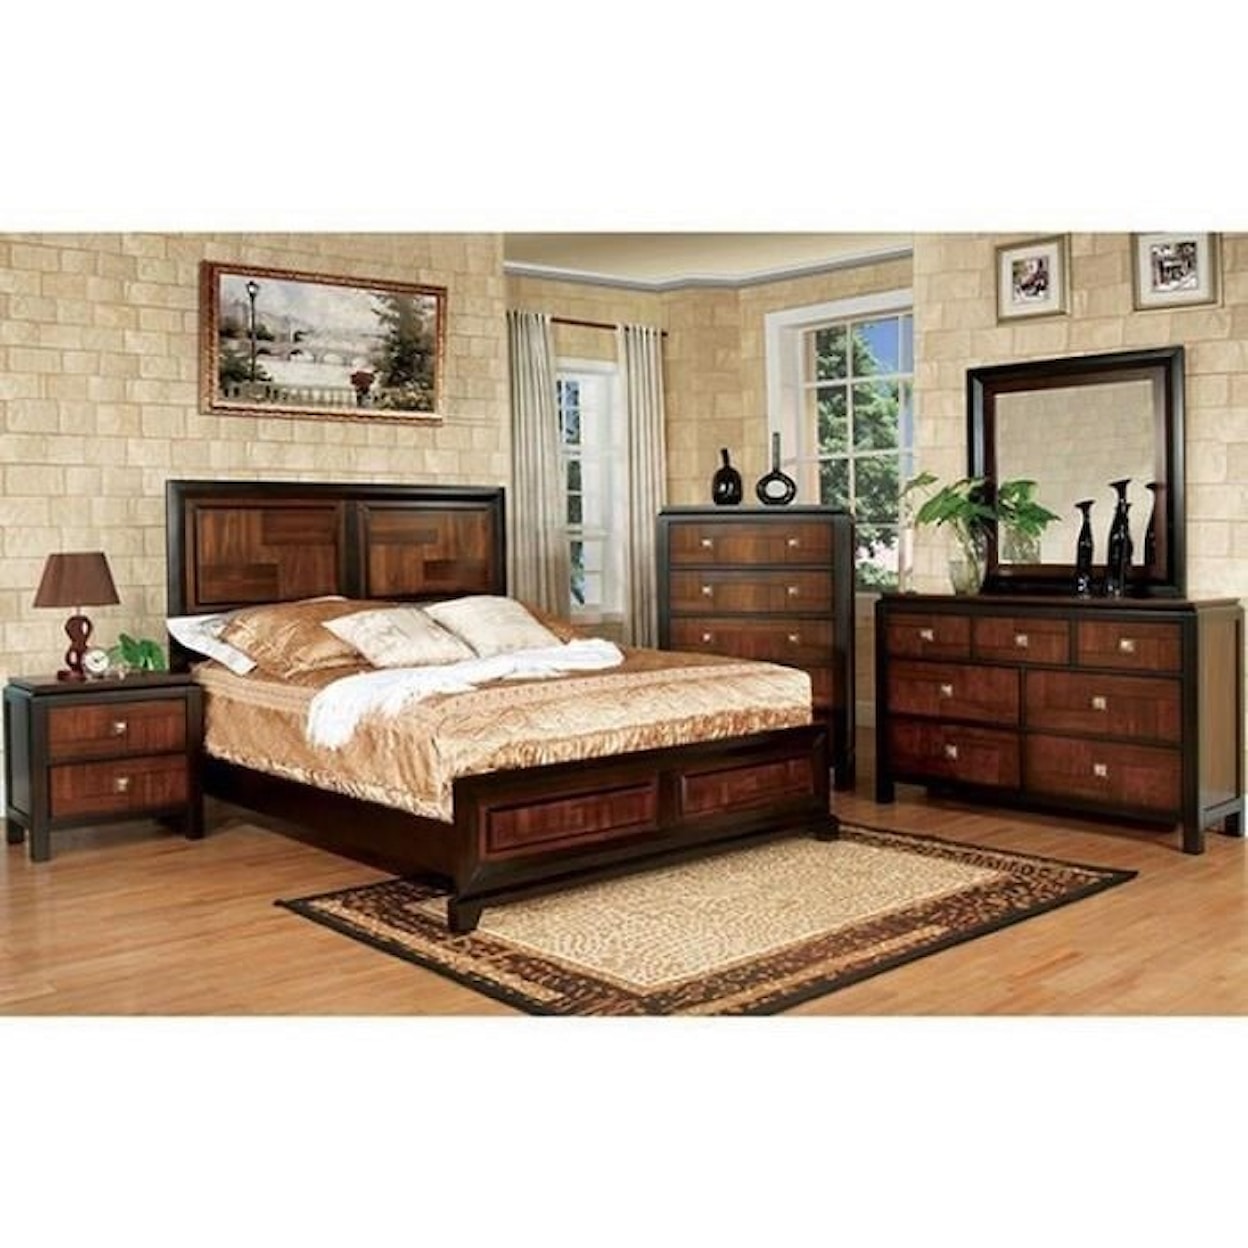 Furniture of America Patra California King Bed